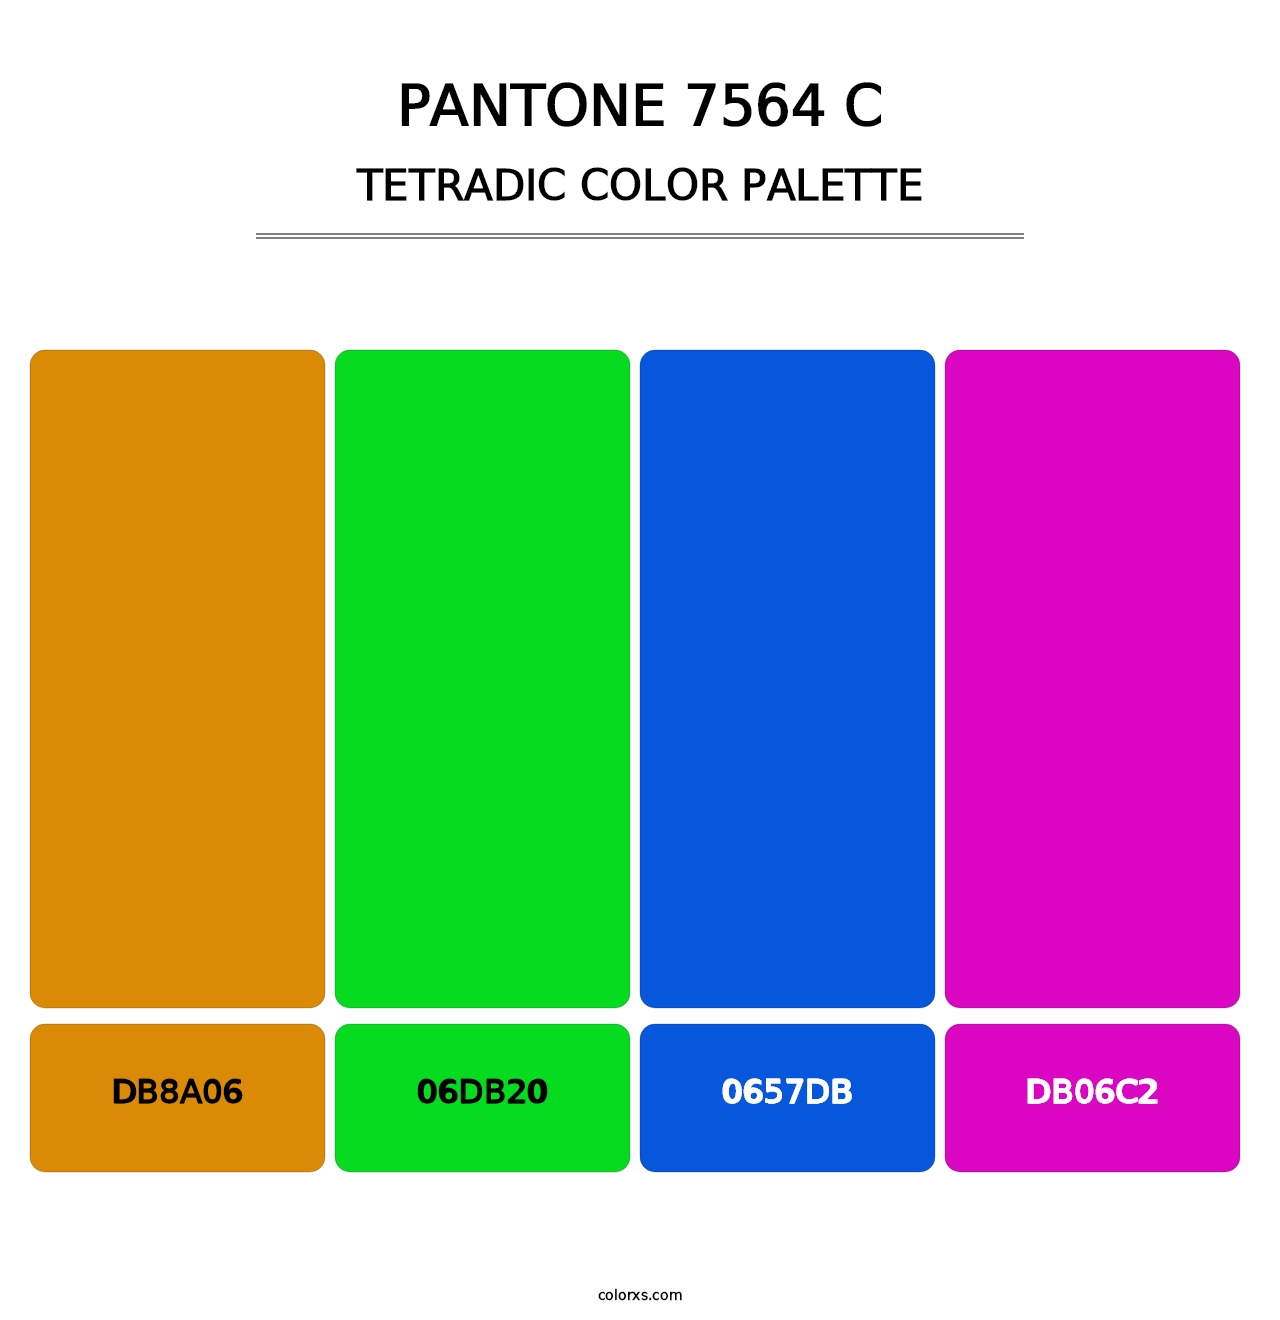 PANTONE 7564 C - Tetradic Color Palette